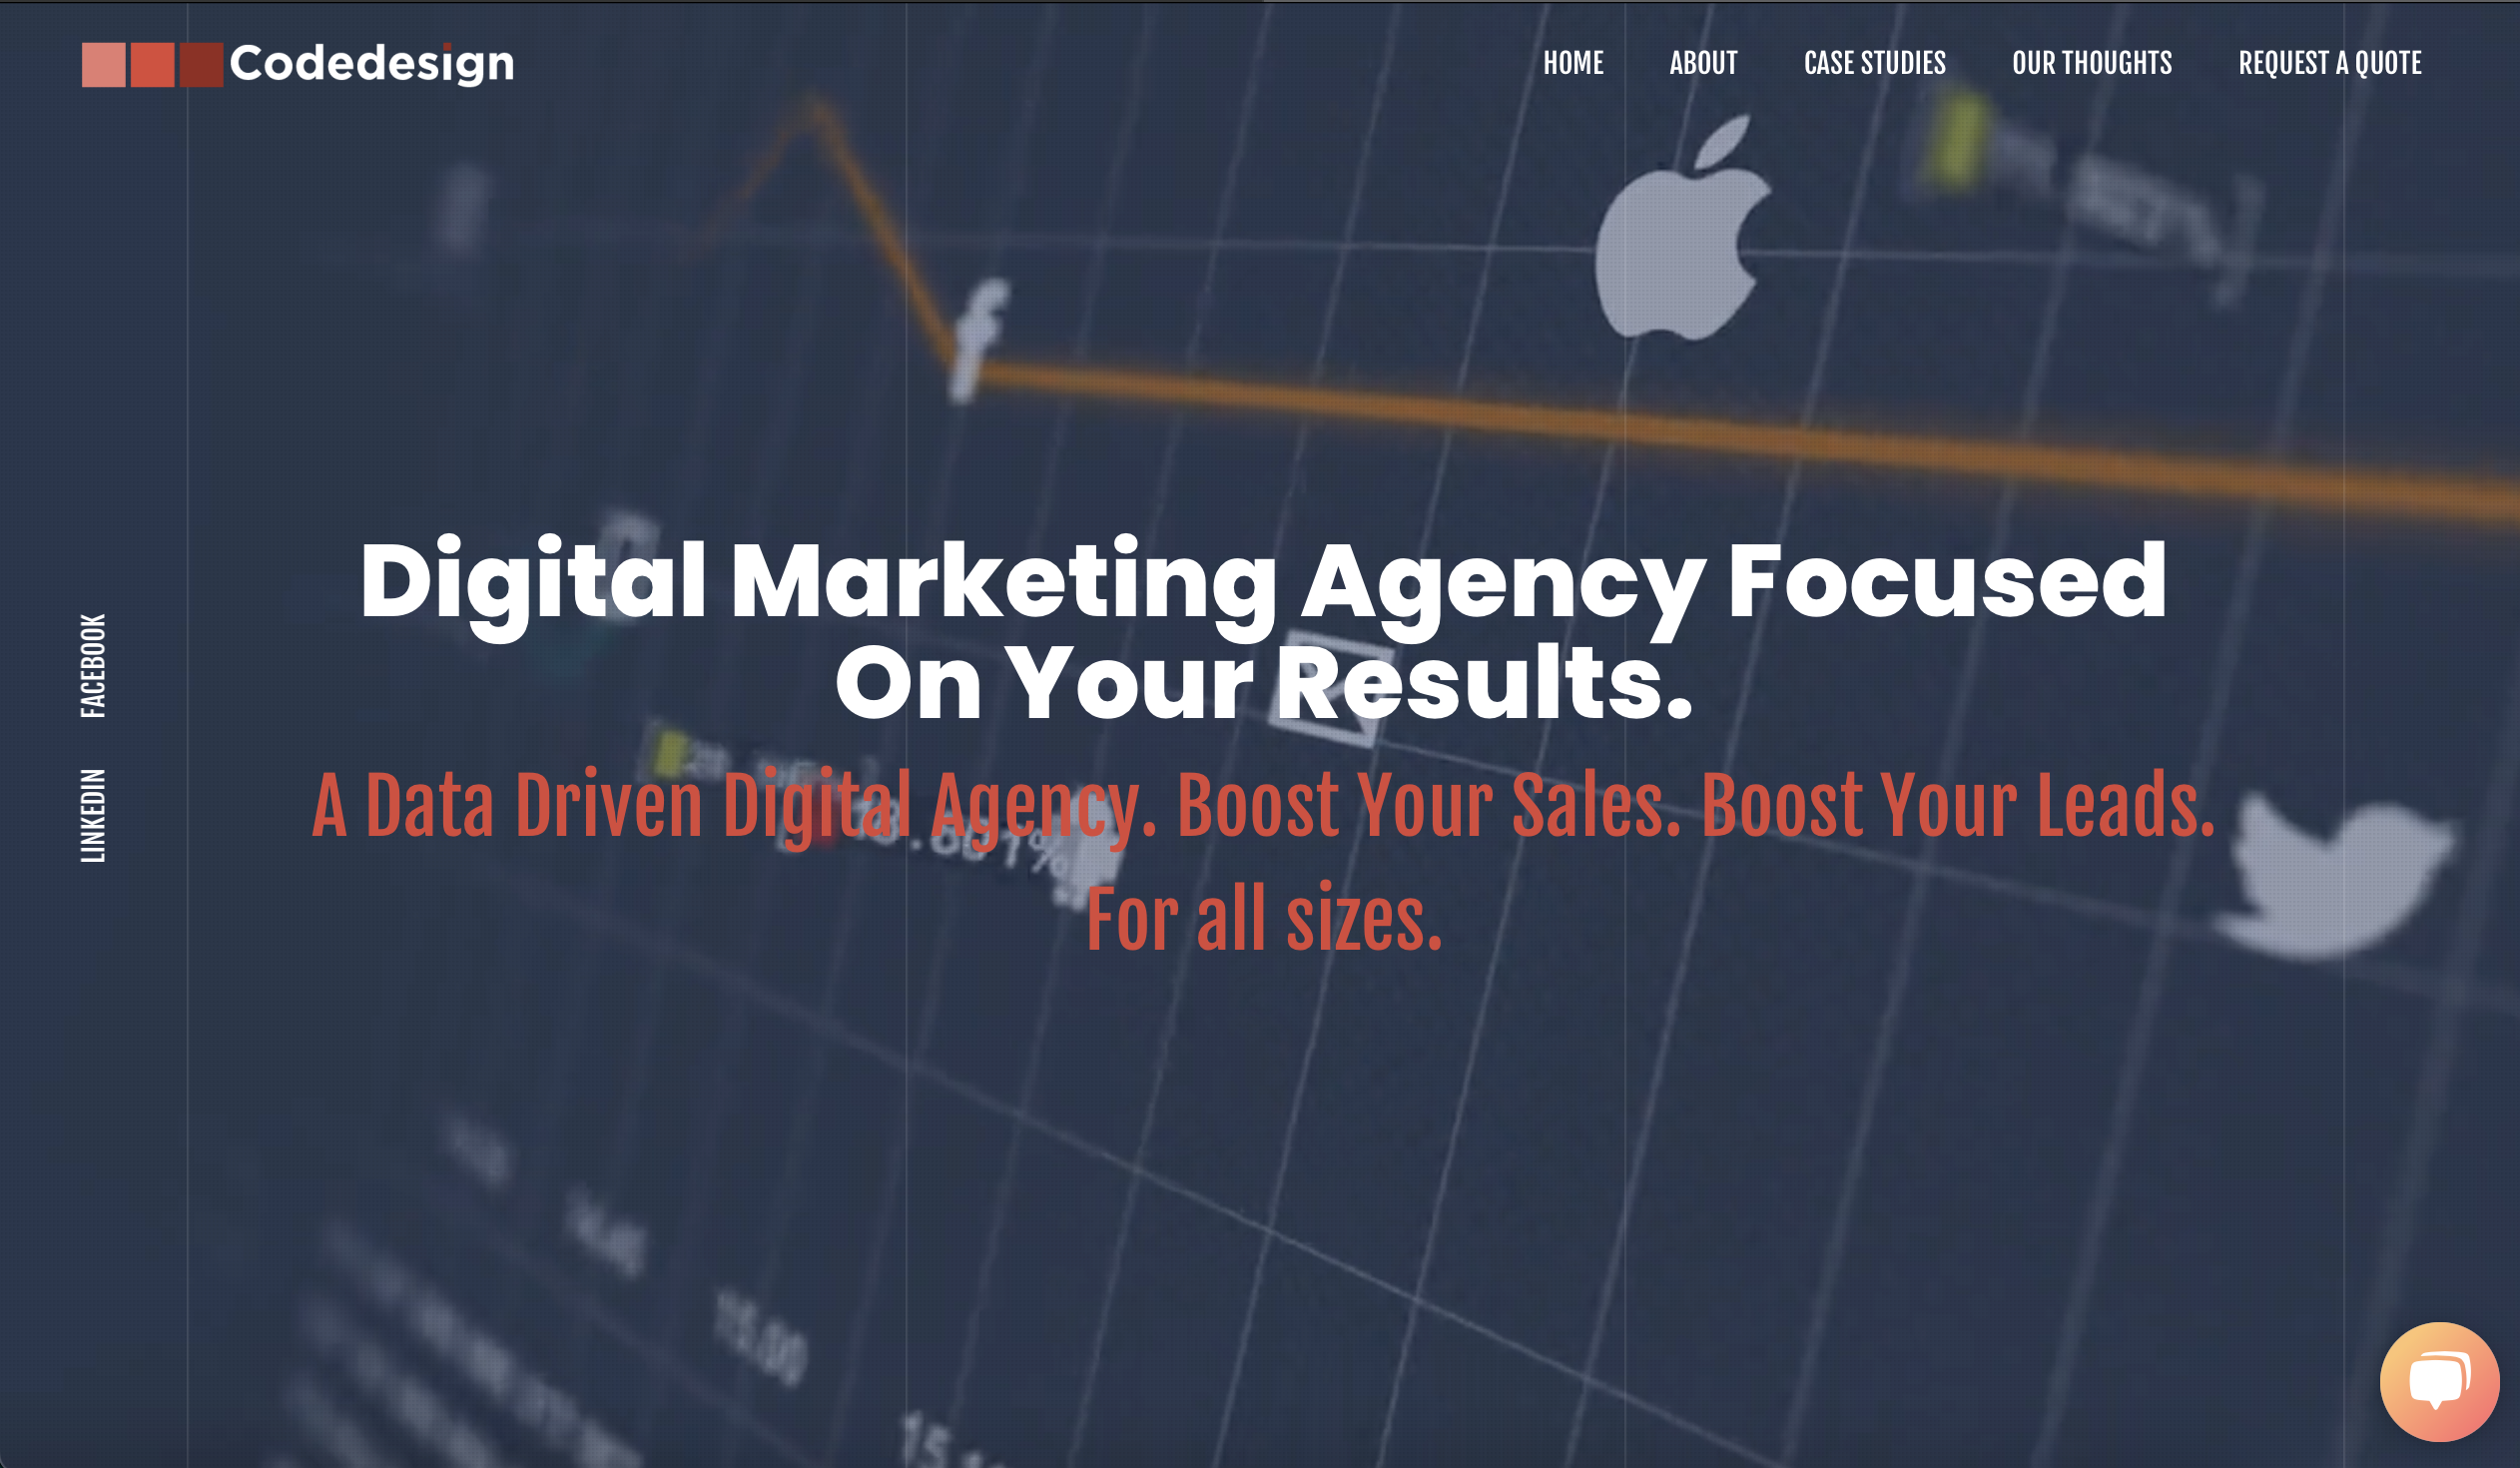 CodeDesign - The leading digital marketing agency